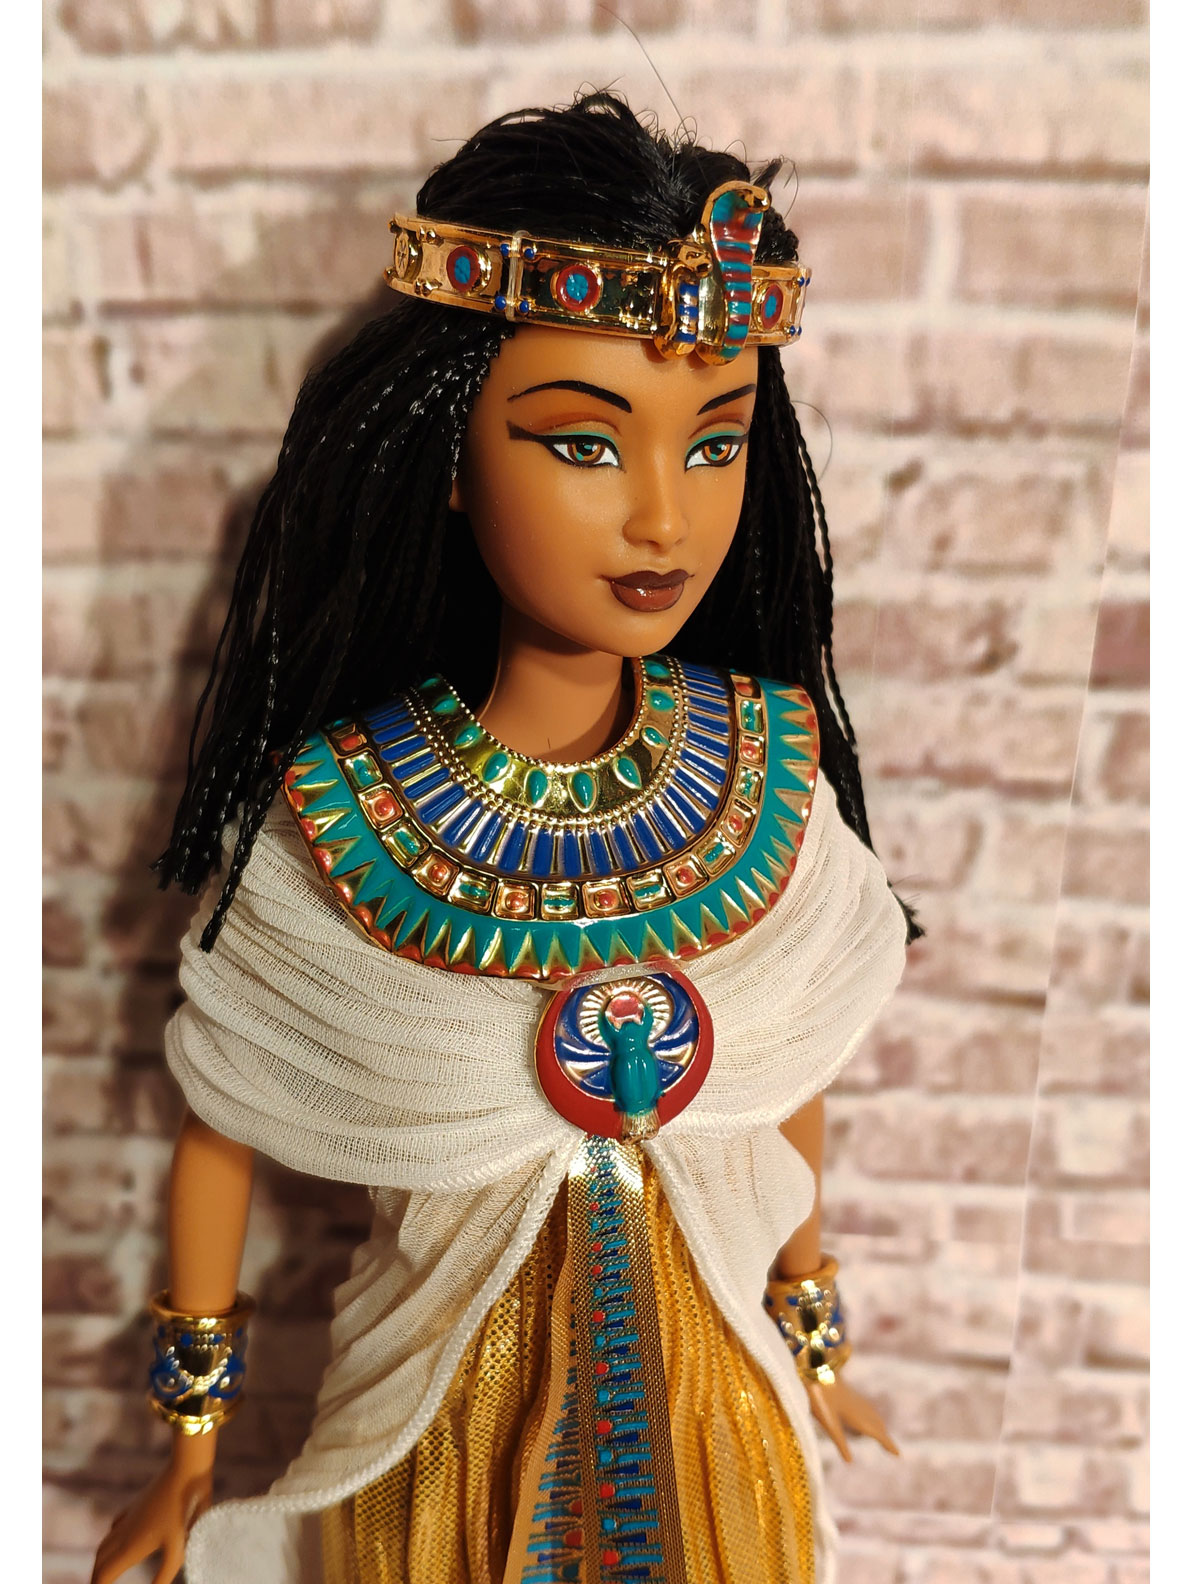 Princess of the Nile 2